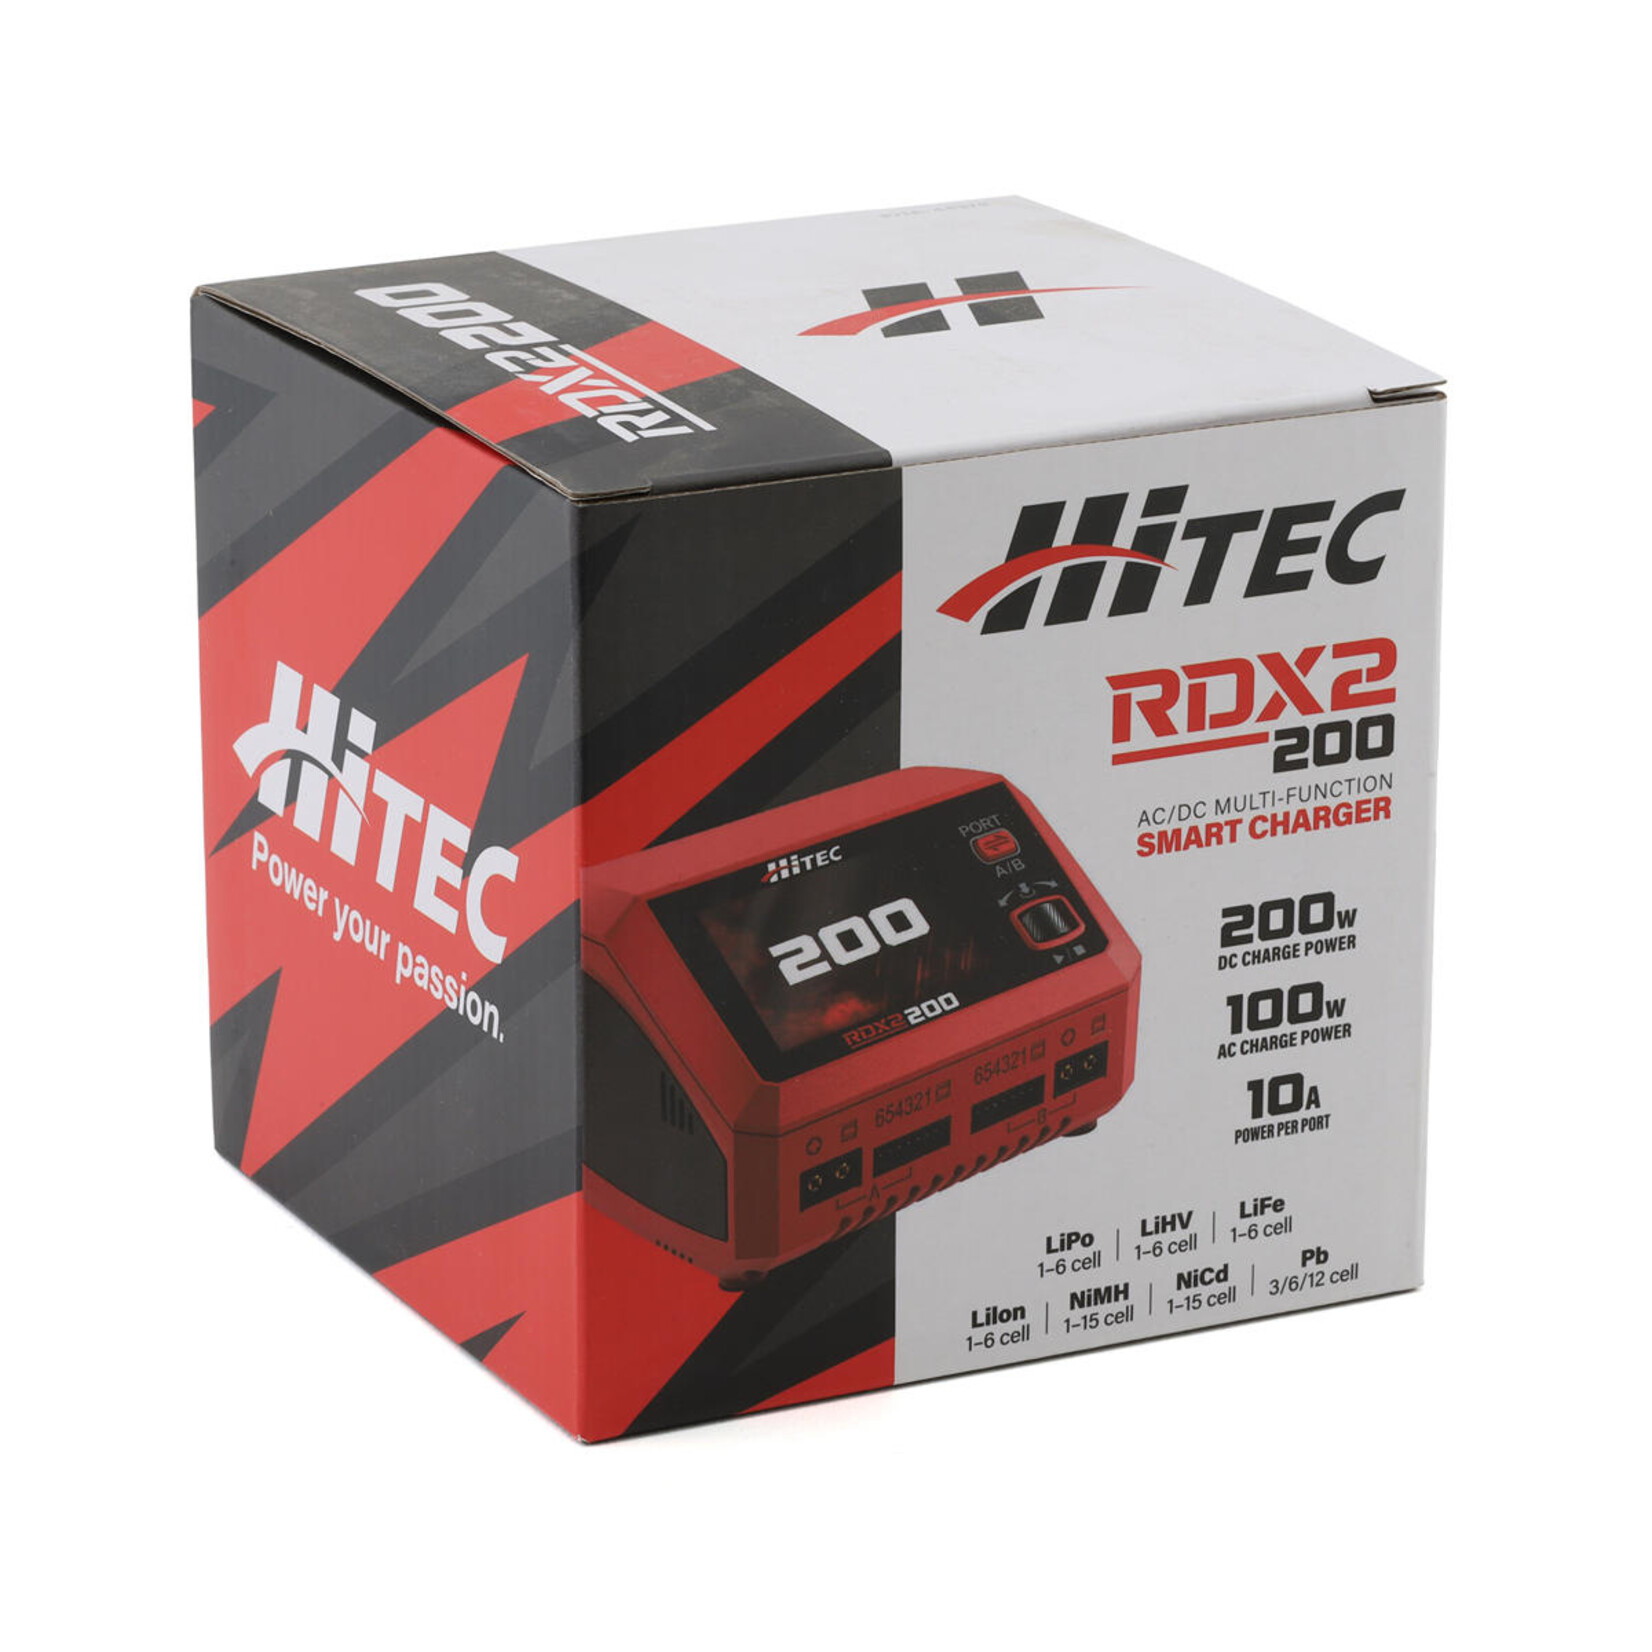 Hitec Hitec RDX2 200 AC/DC LiPo Balance Charger (6S/10A/200W) #44370